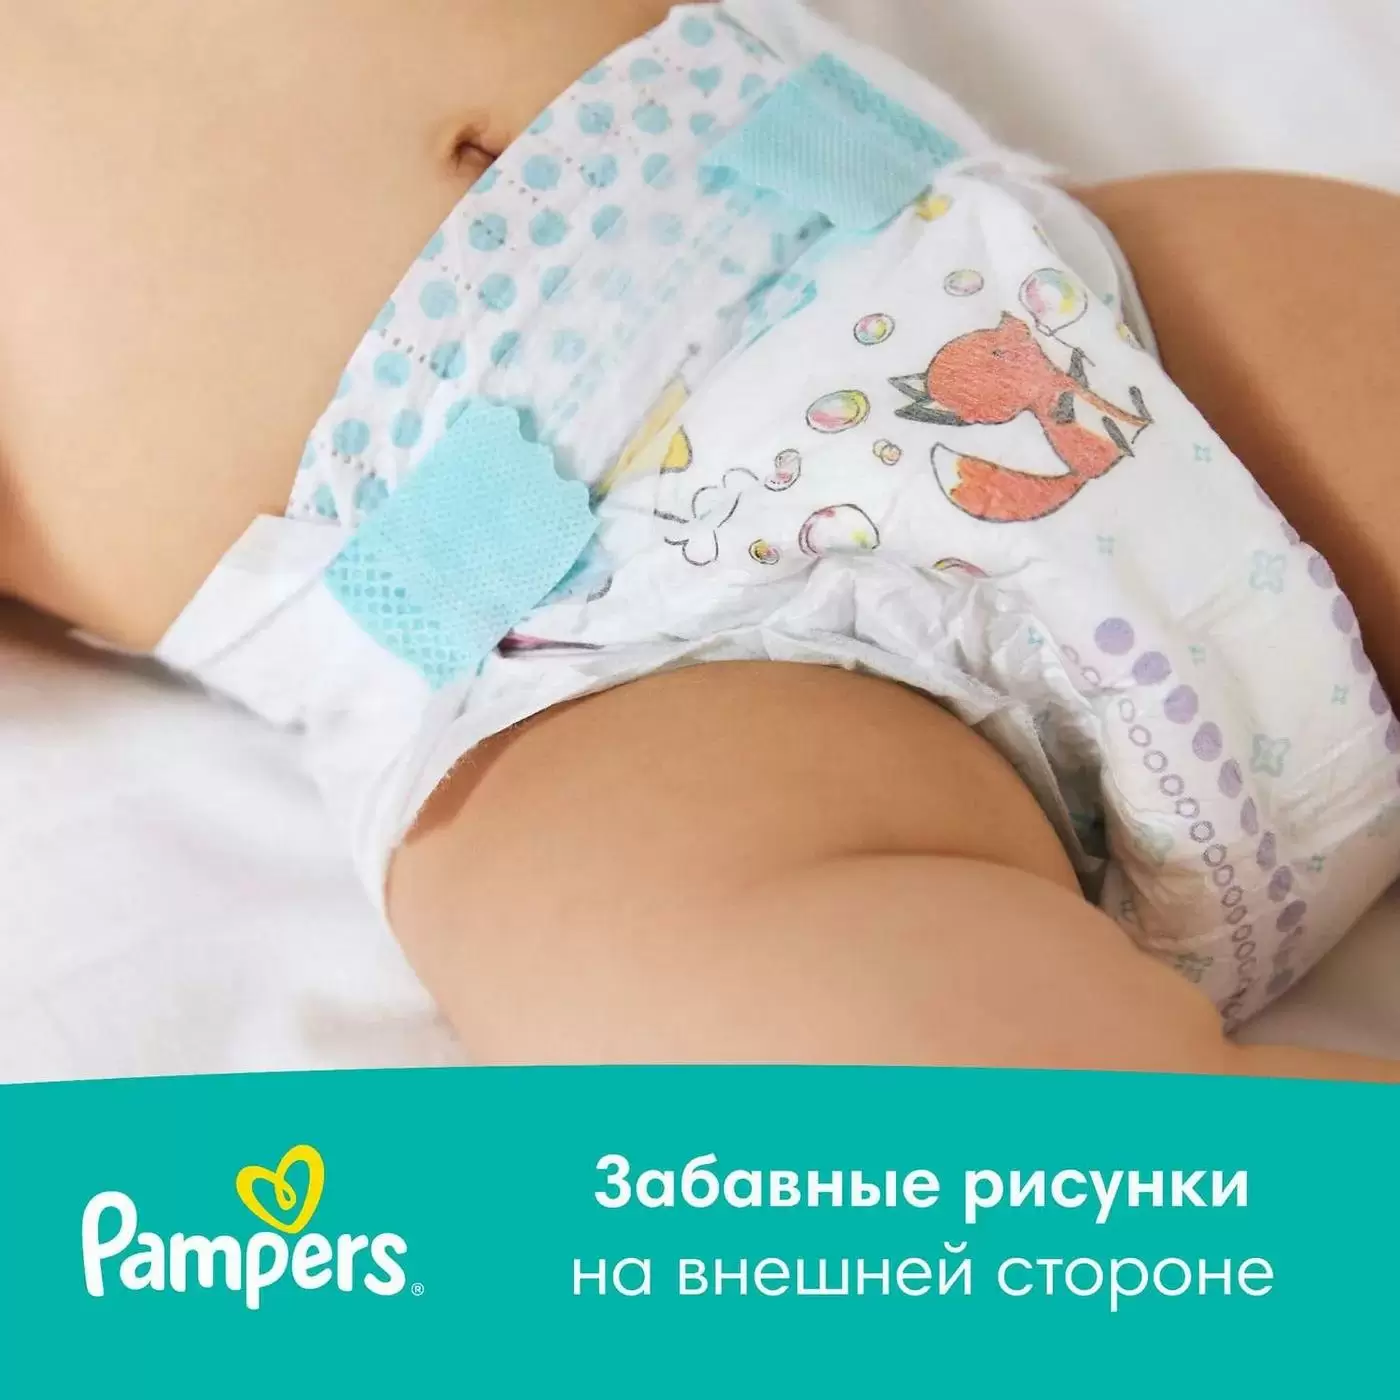 Подгузники PAMPERS Active Baby-Dry Extra Large Jumbo (6) 52шт